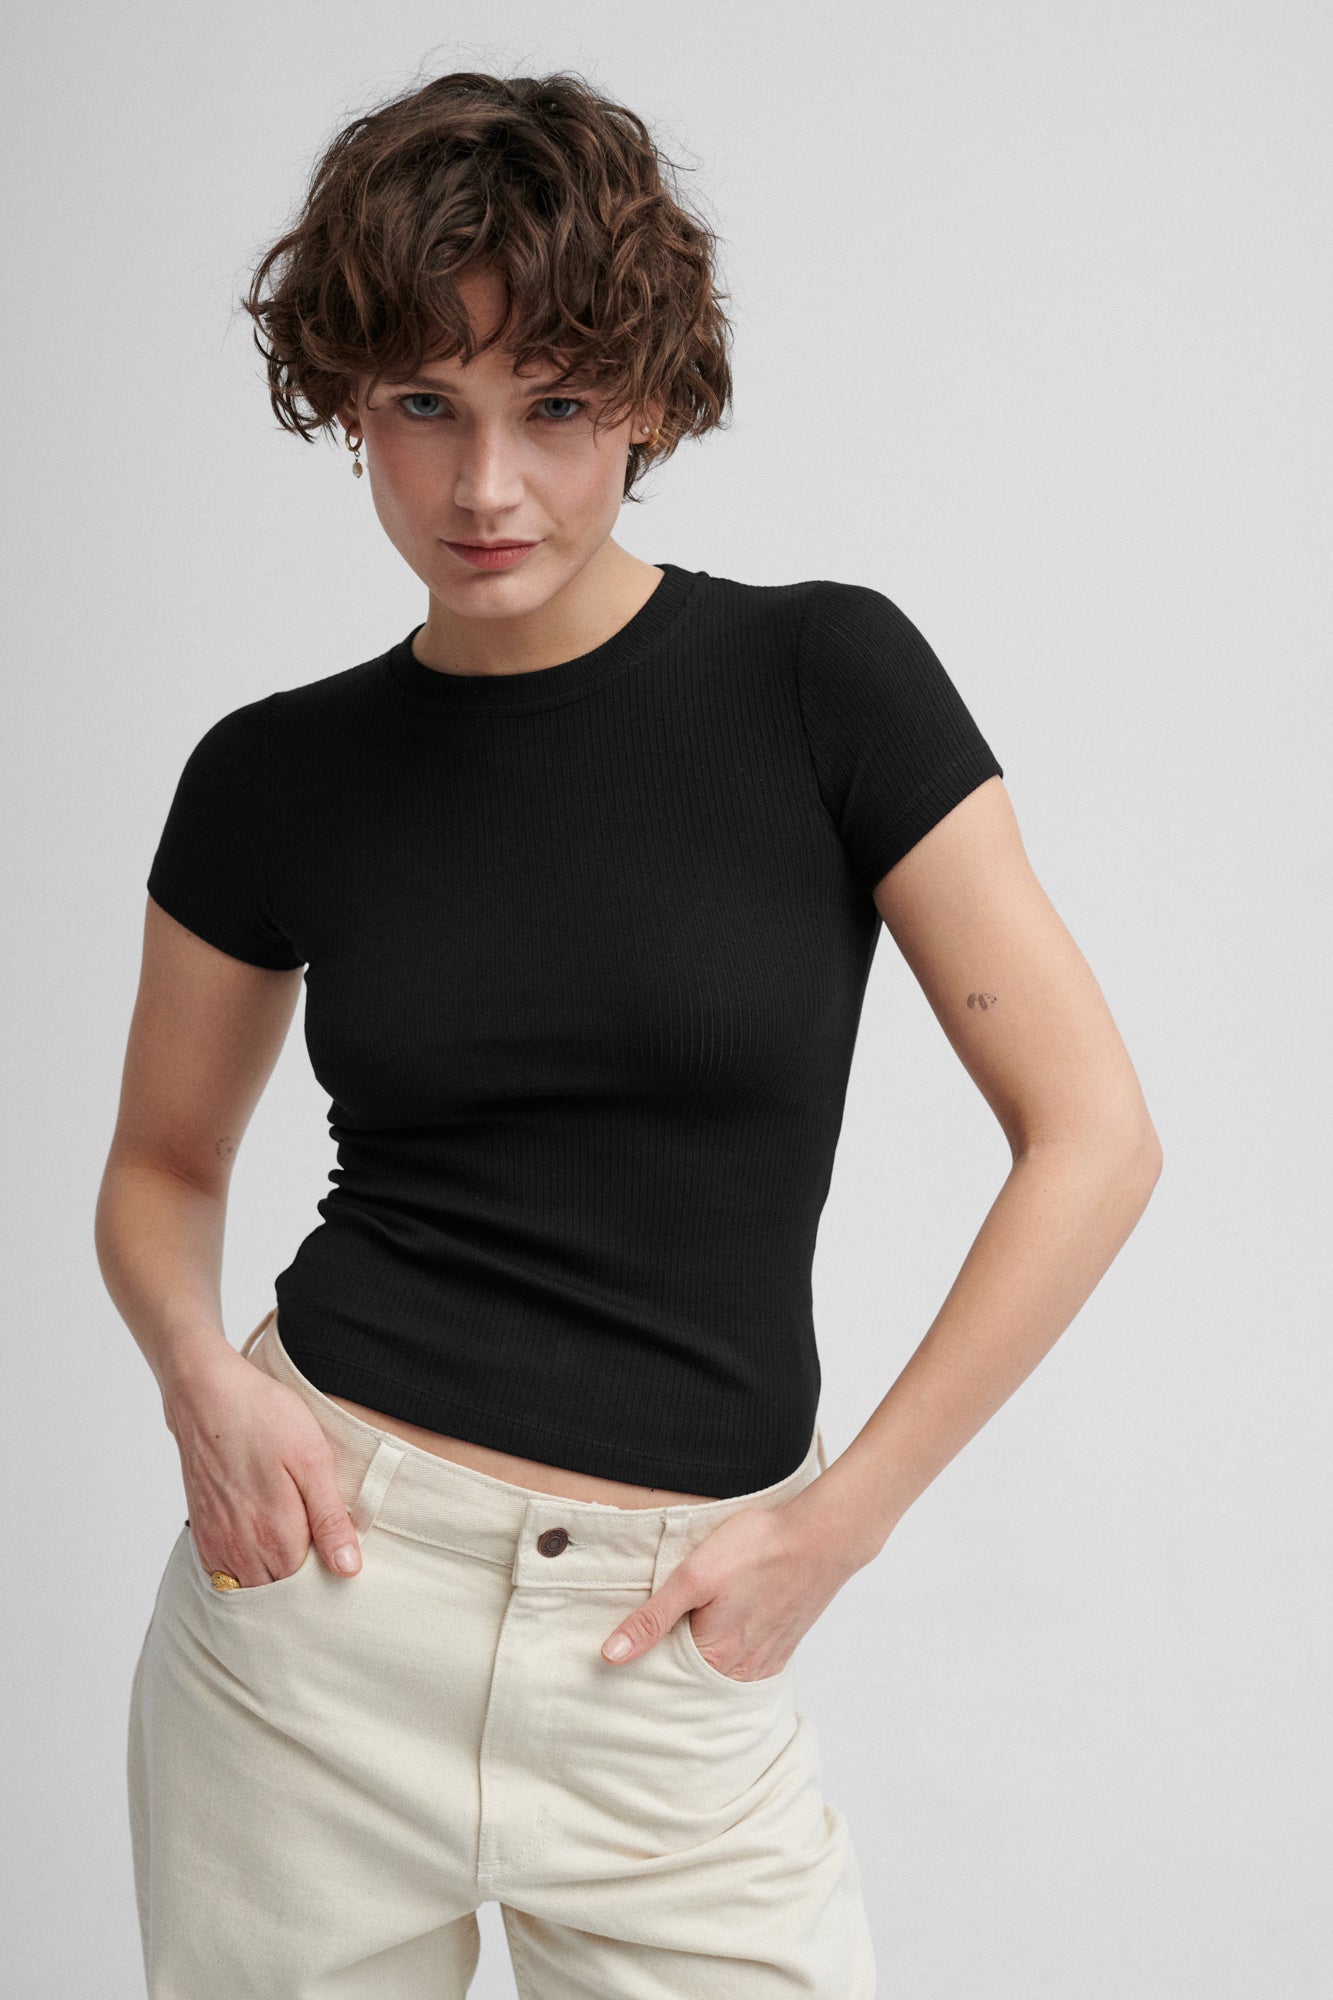 T-shirt in organic cotton / 13 / 04 / onyx black